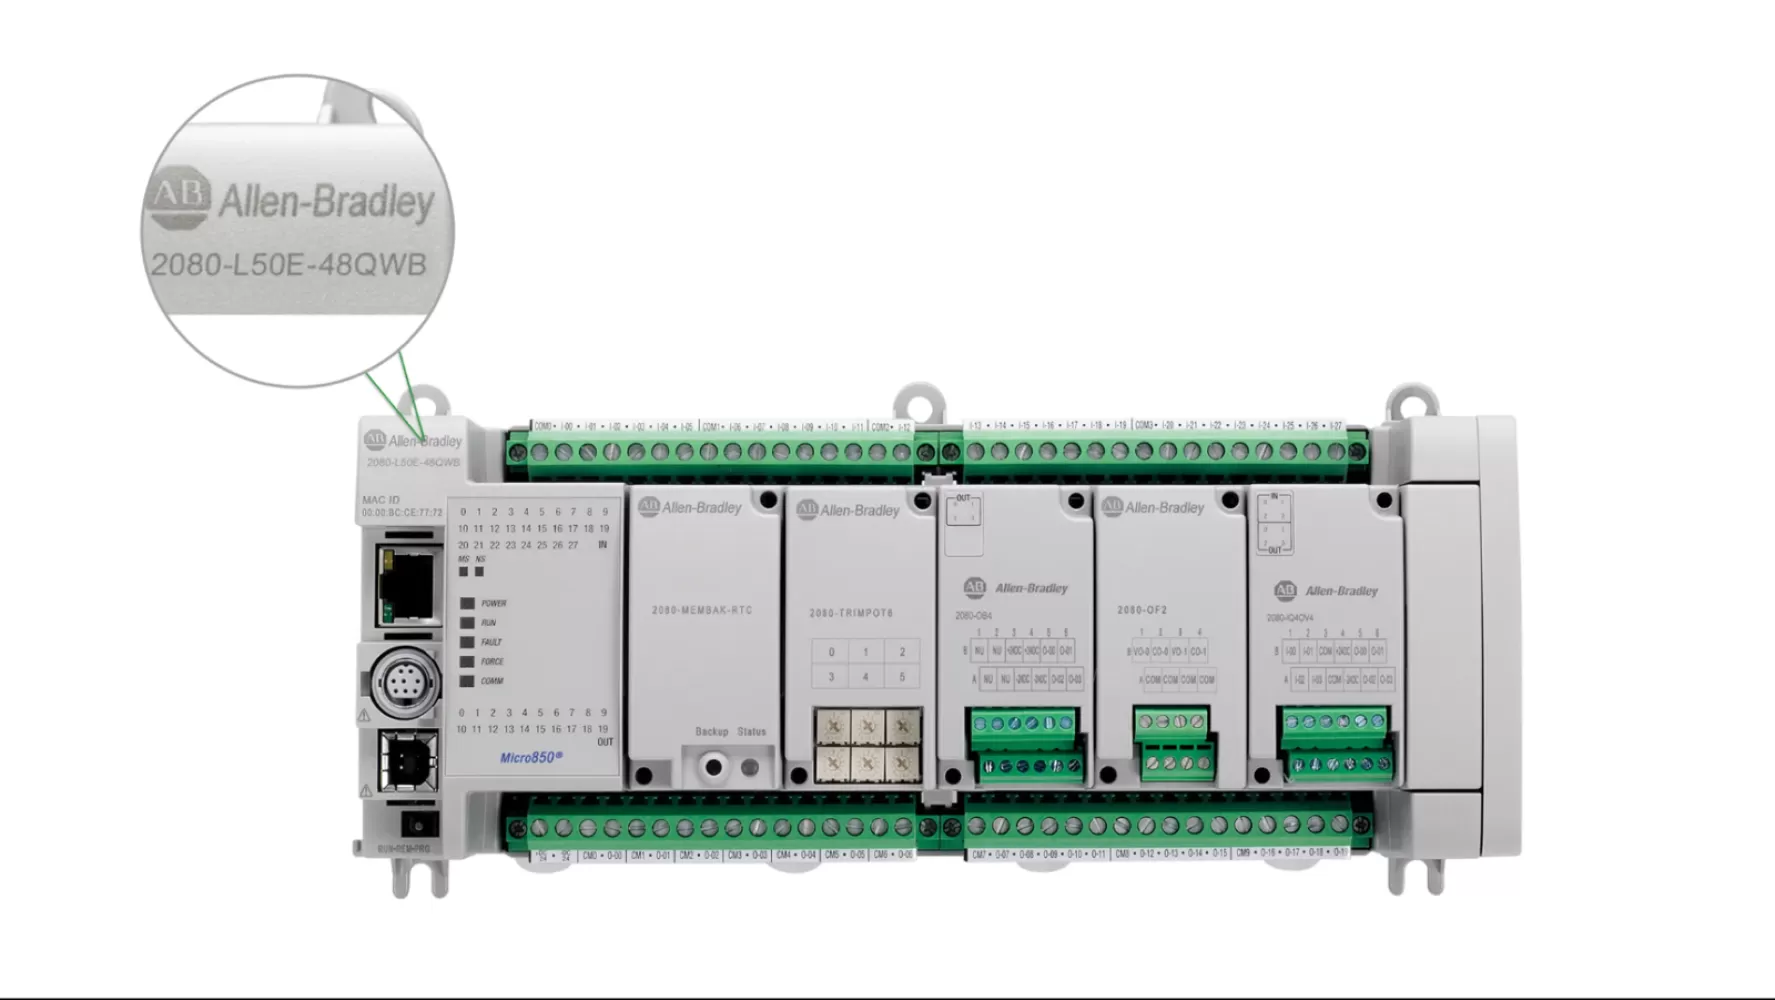 Allen Bradley PLC Micro850 Programmable Logic Controller Systems